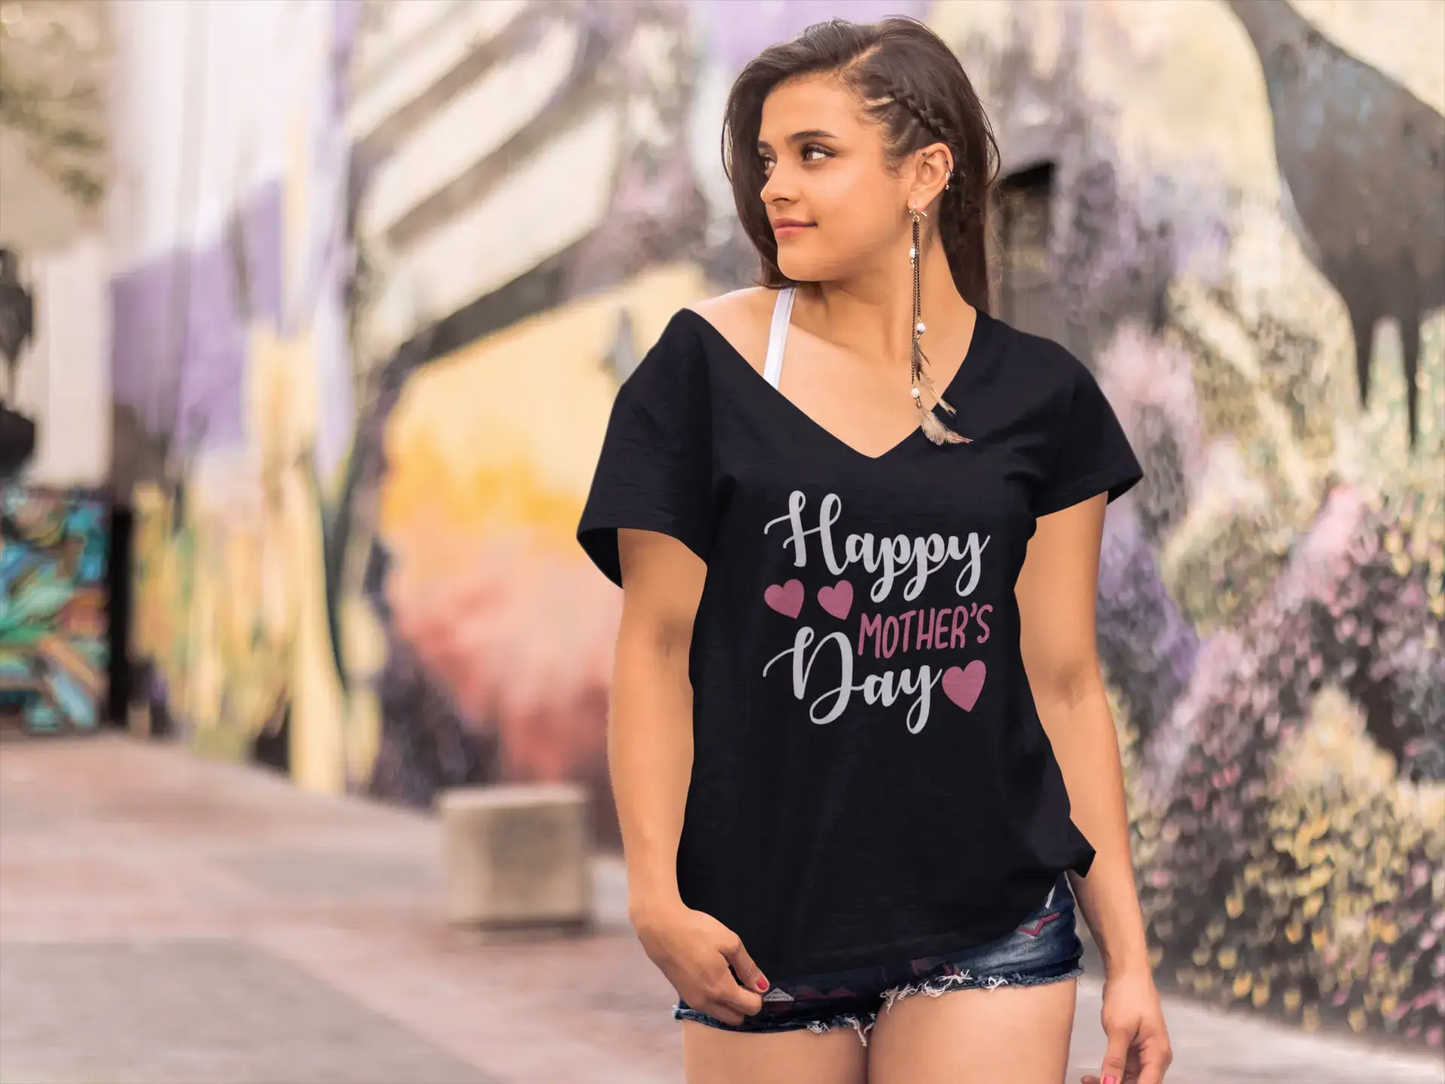 ULTRABASIC Women's T-Shirt Happy Mother's Day - Short Sleeve Tee Shirt Tops